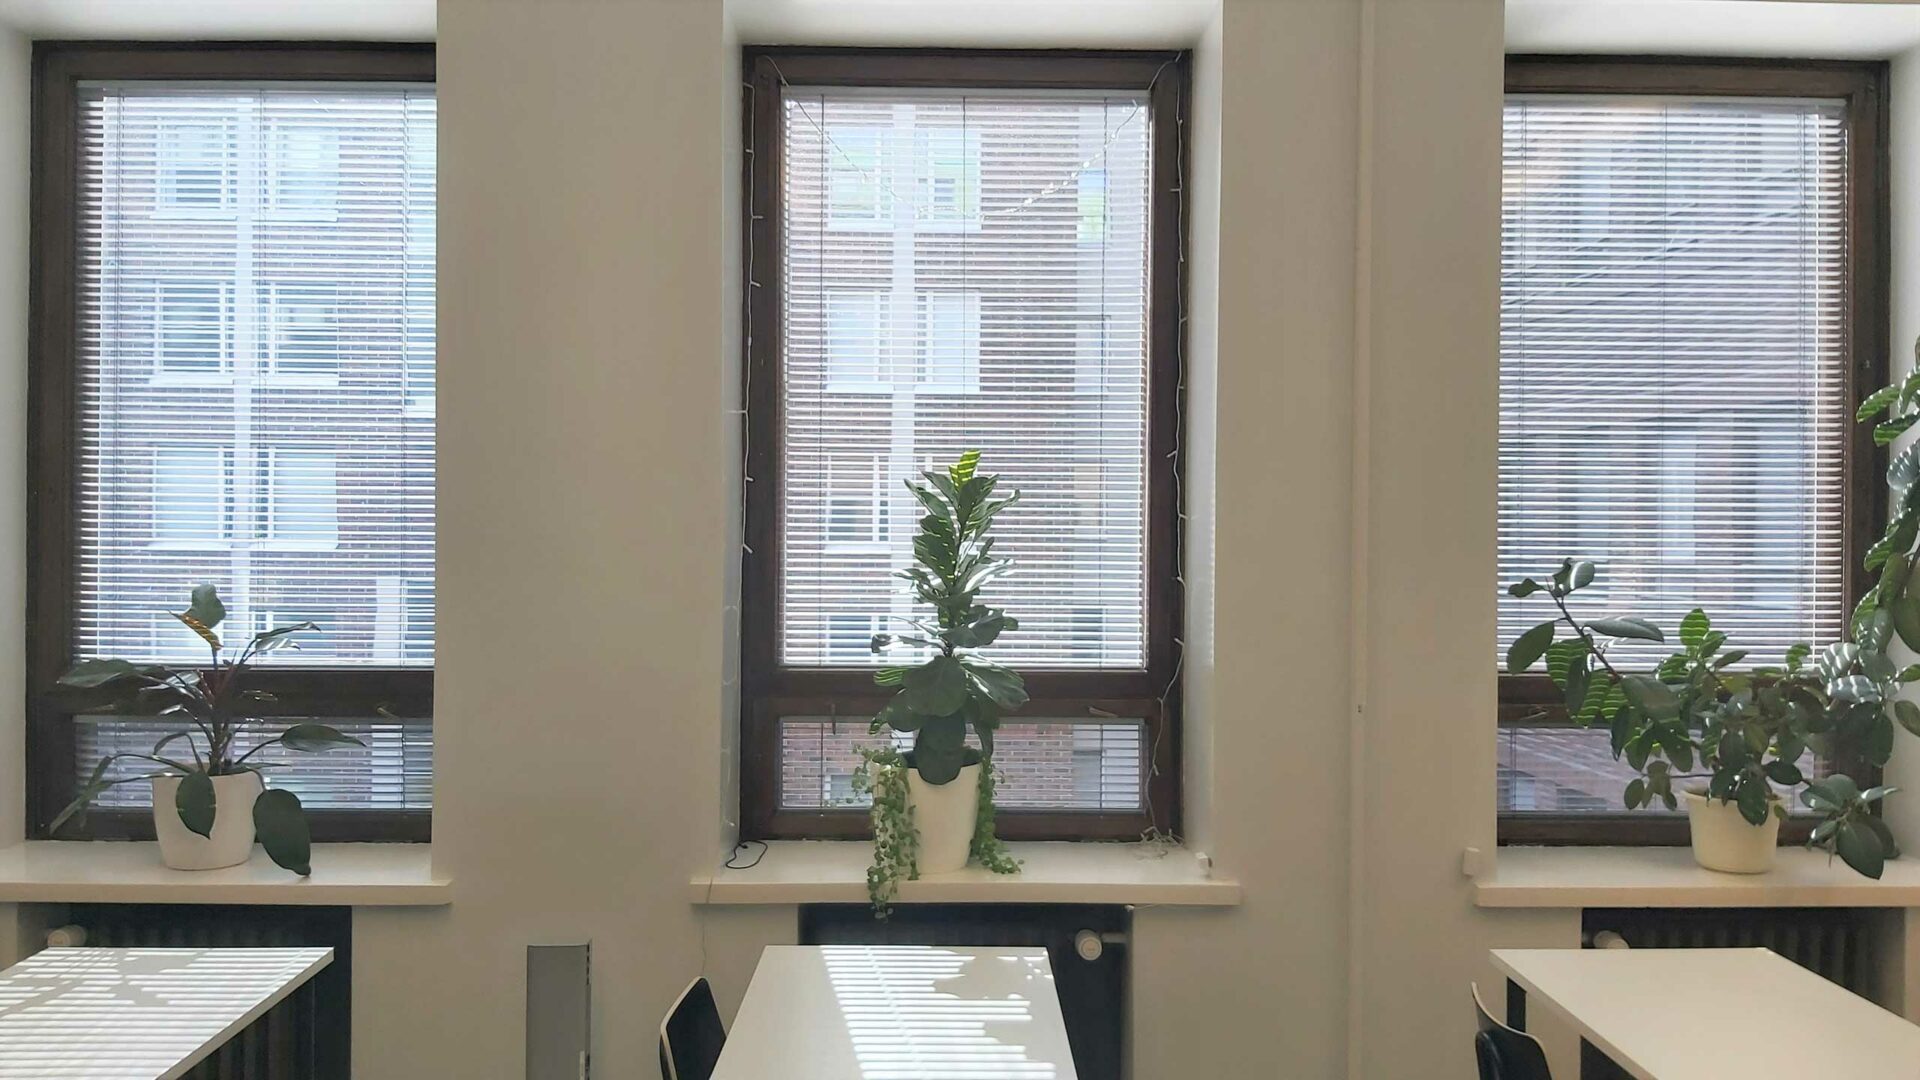 Houseplants on meeting room windows.
